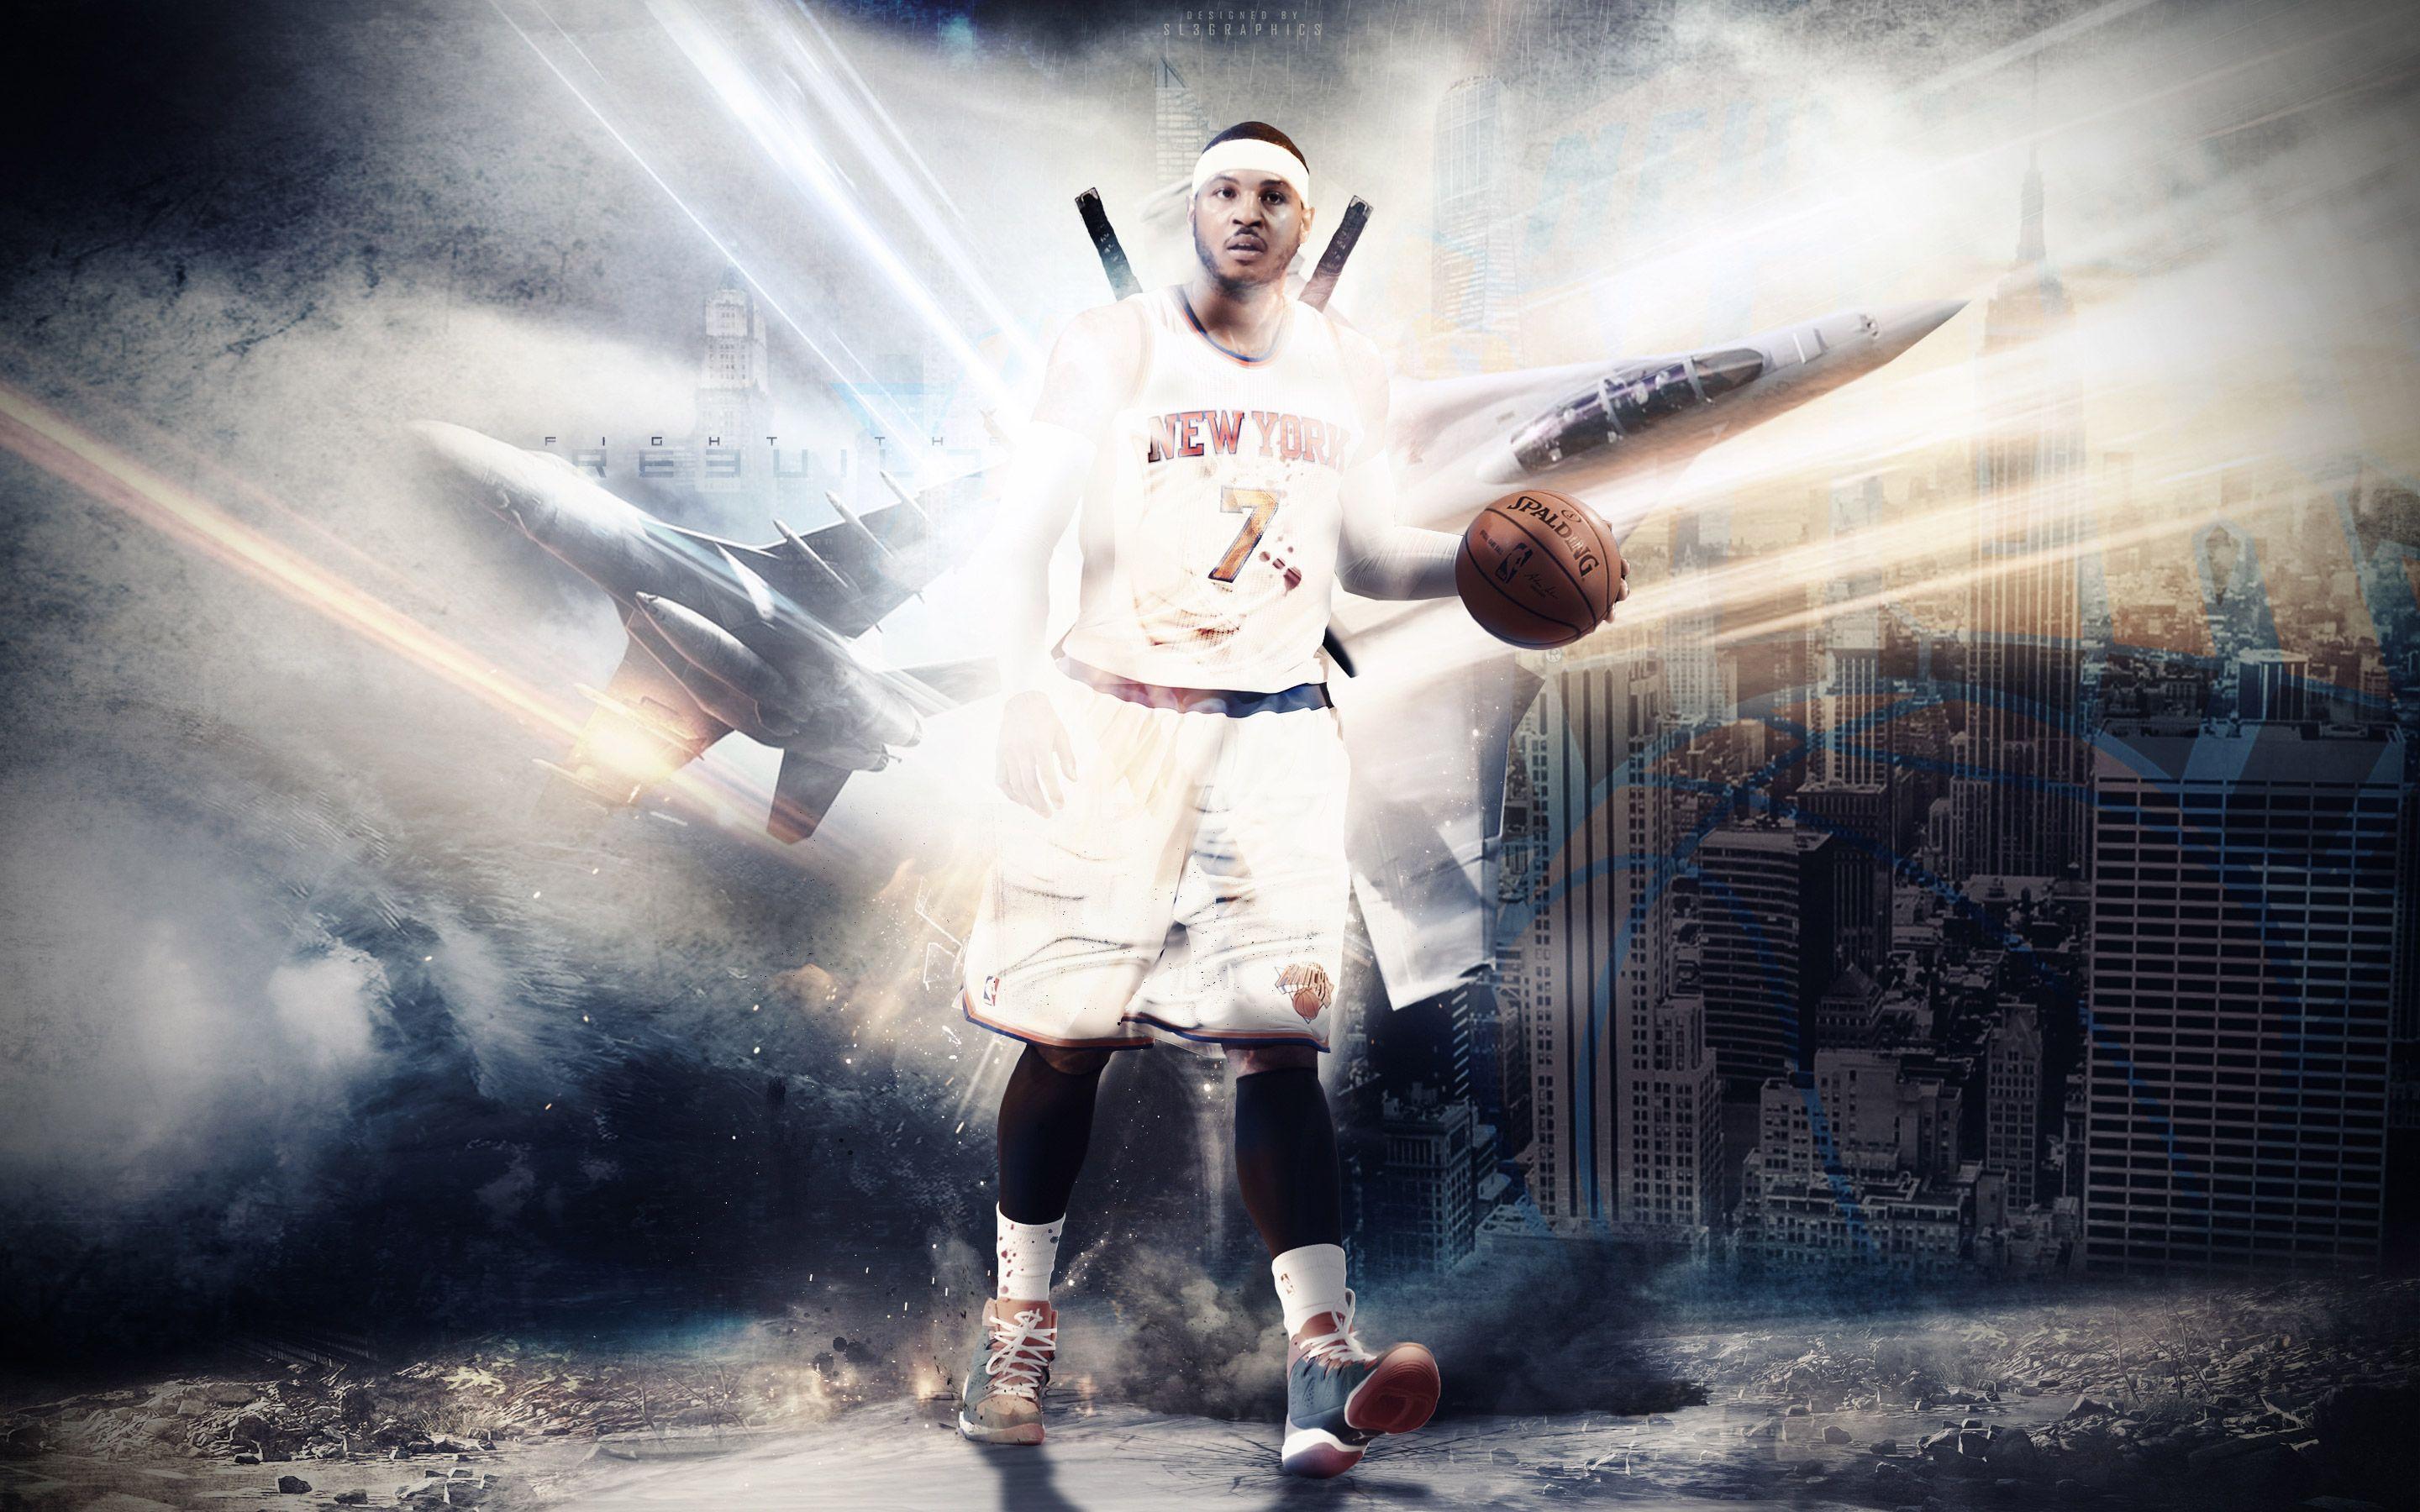 Carmelo Anthony New York Knicks HD Wallpaper